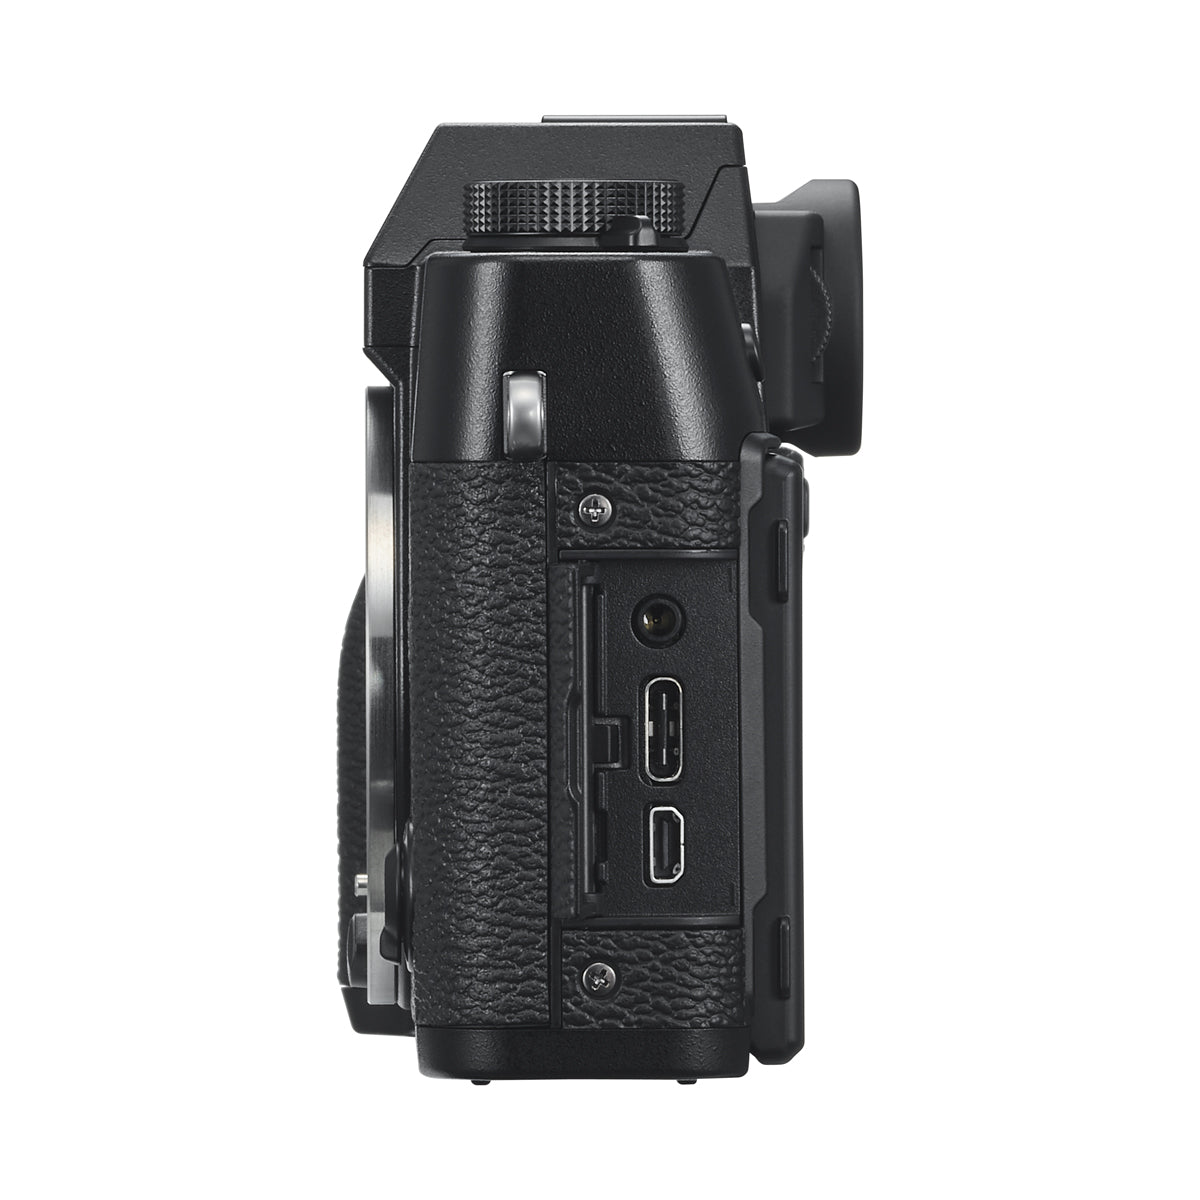 Fujifilm X-T30 Mirrorless Digital Camera Body (Black)